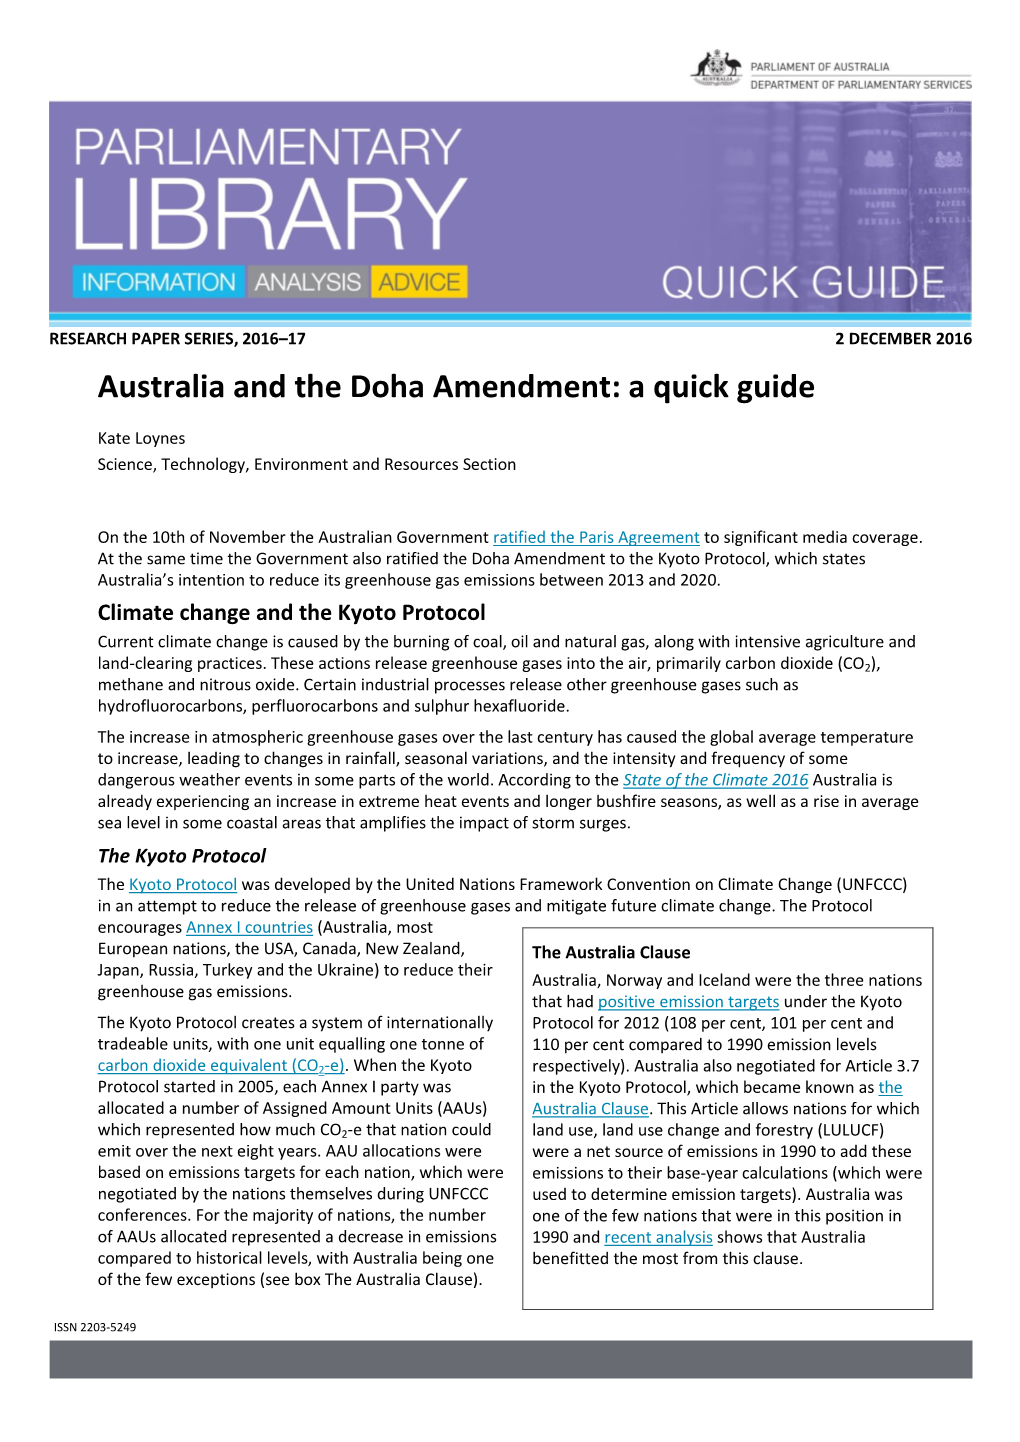 Australia and the Doha Amendment: a Quick Guide